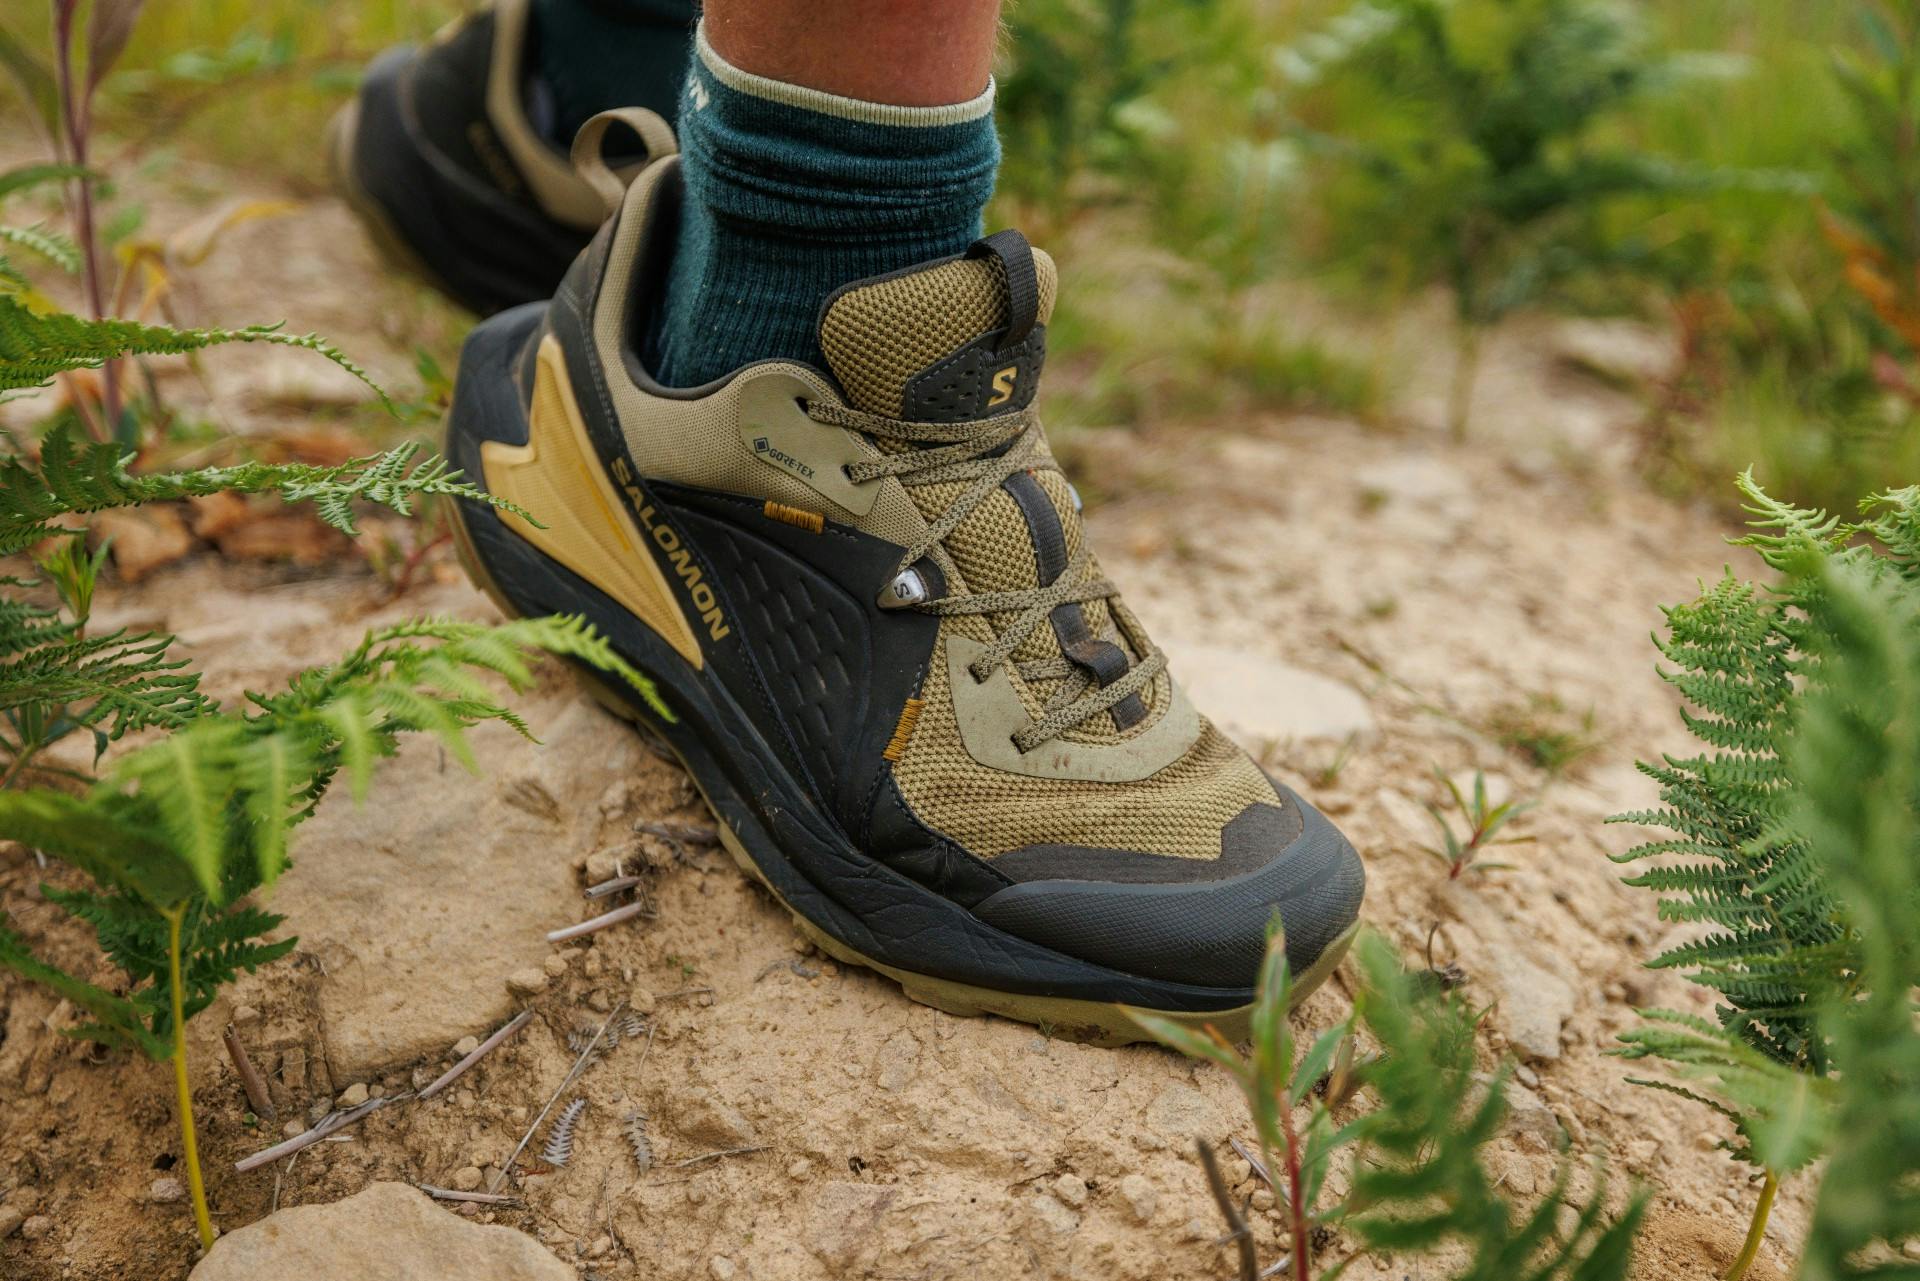 The Ultimate Showdown: Keen vs. Merrell Hiking Shoes